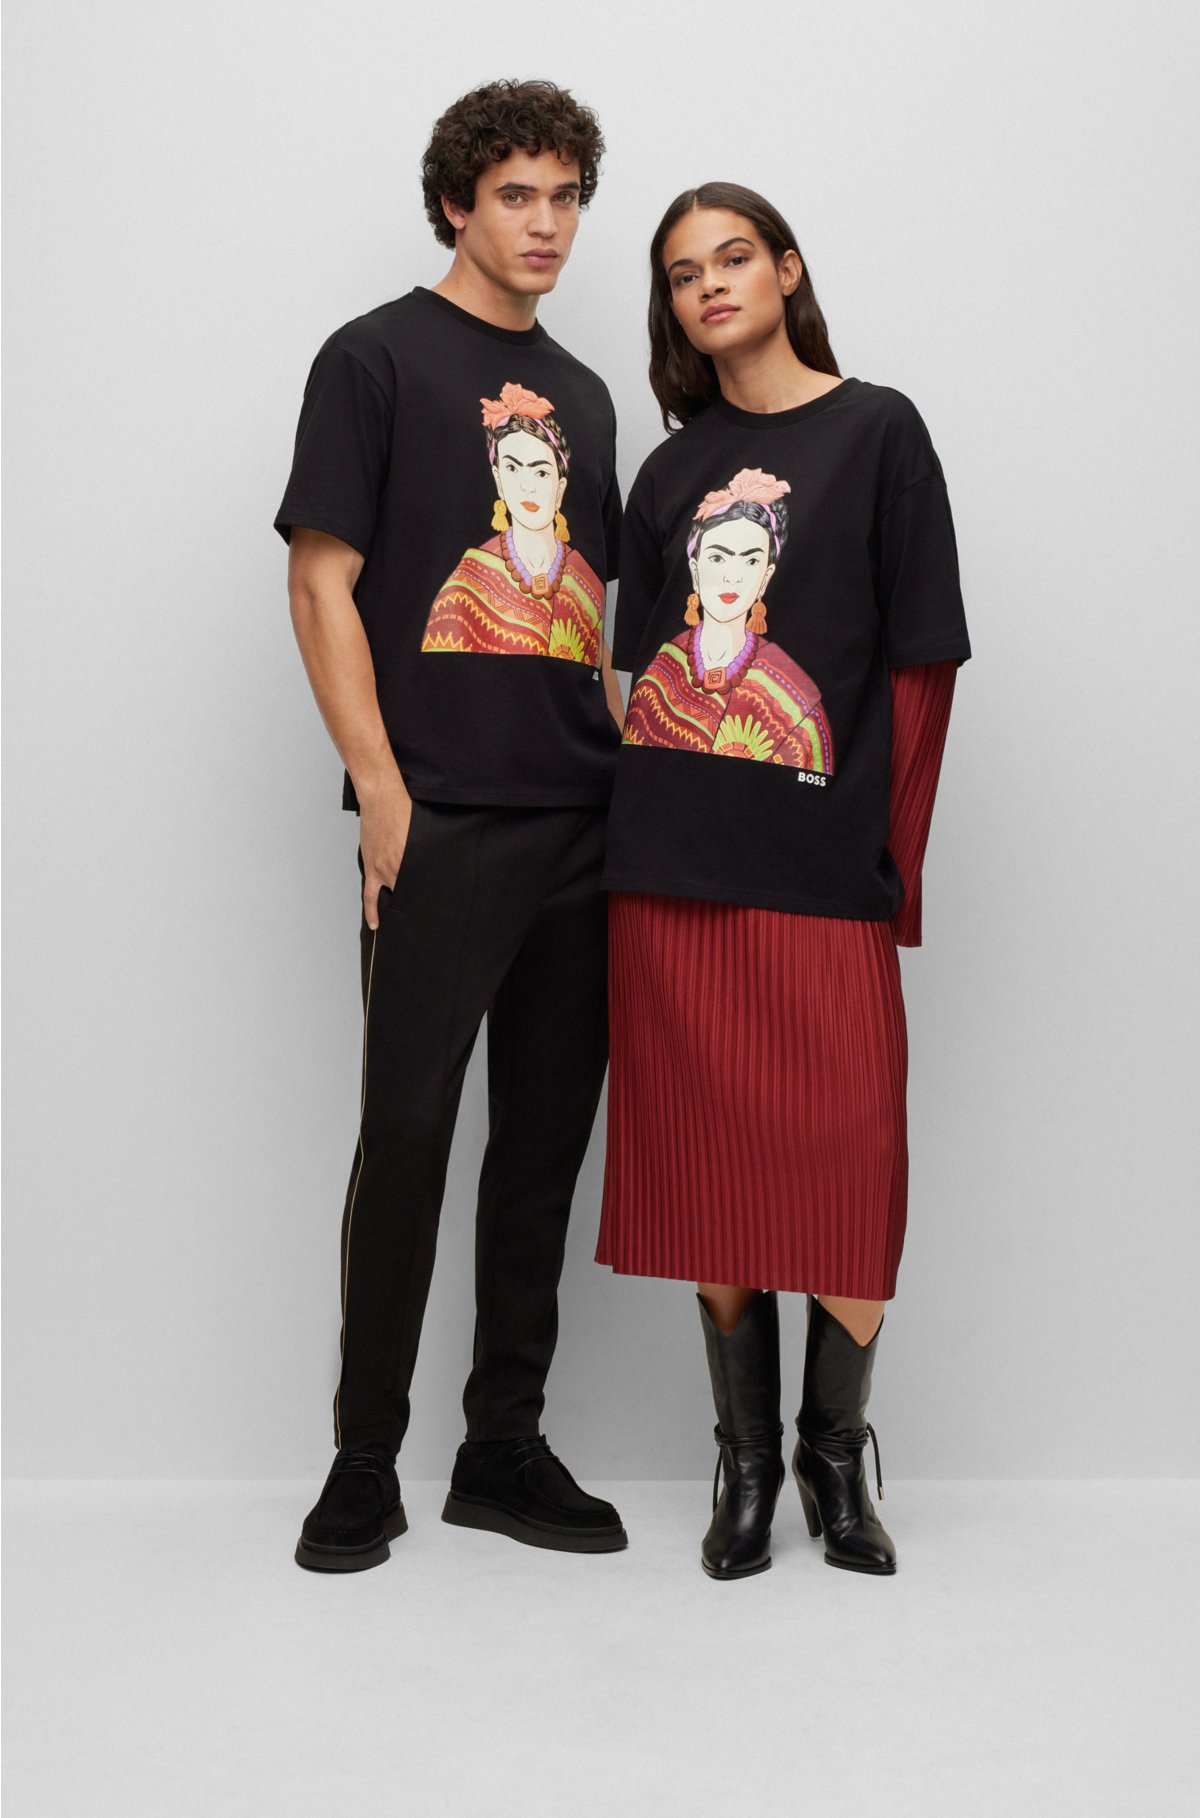 BOSS Camiseta relaxed fit en algodón gráfico de Frida Kahlo